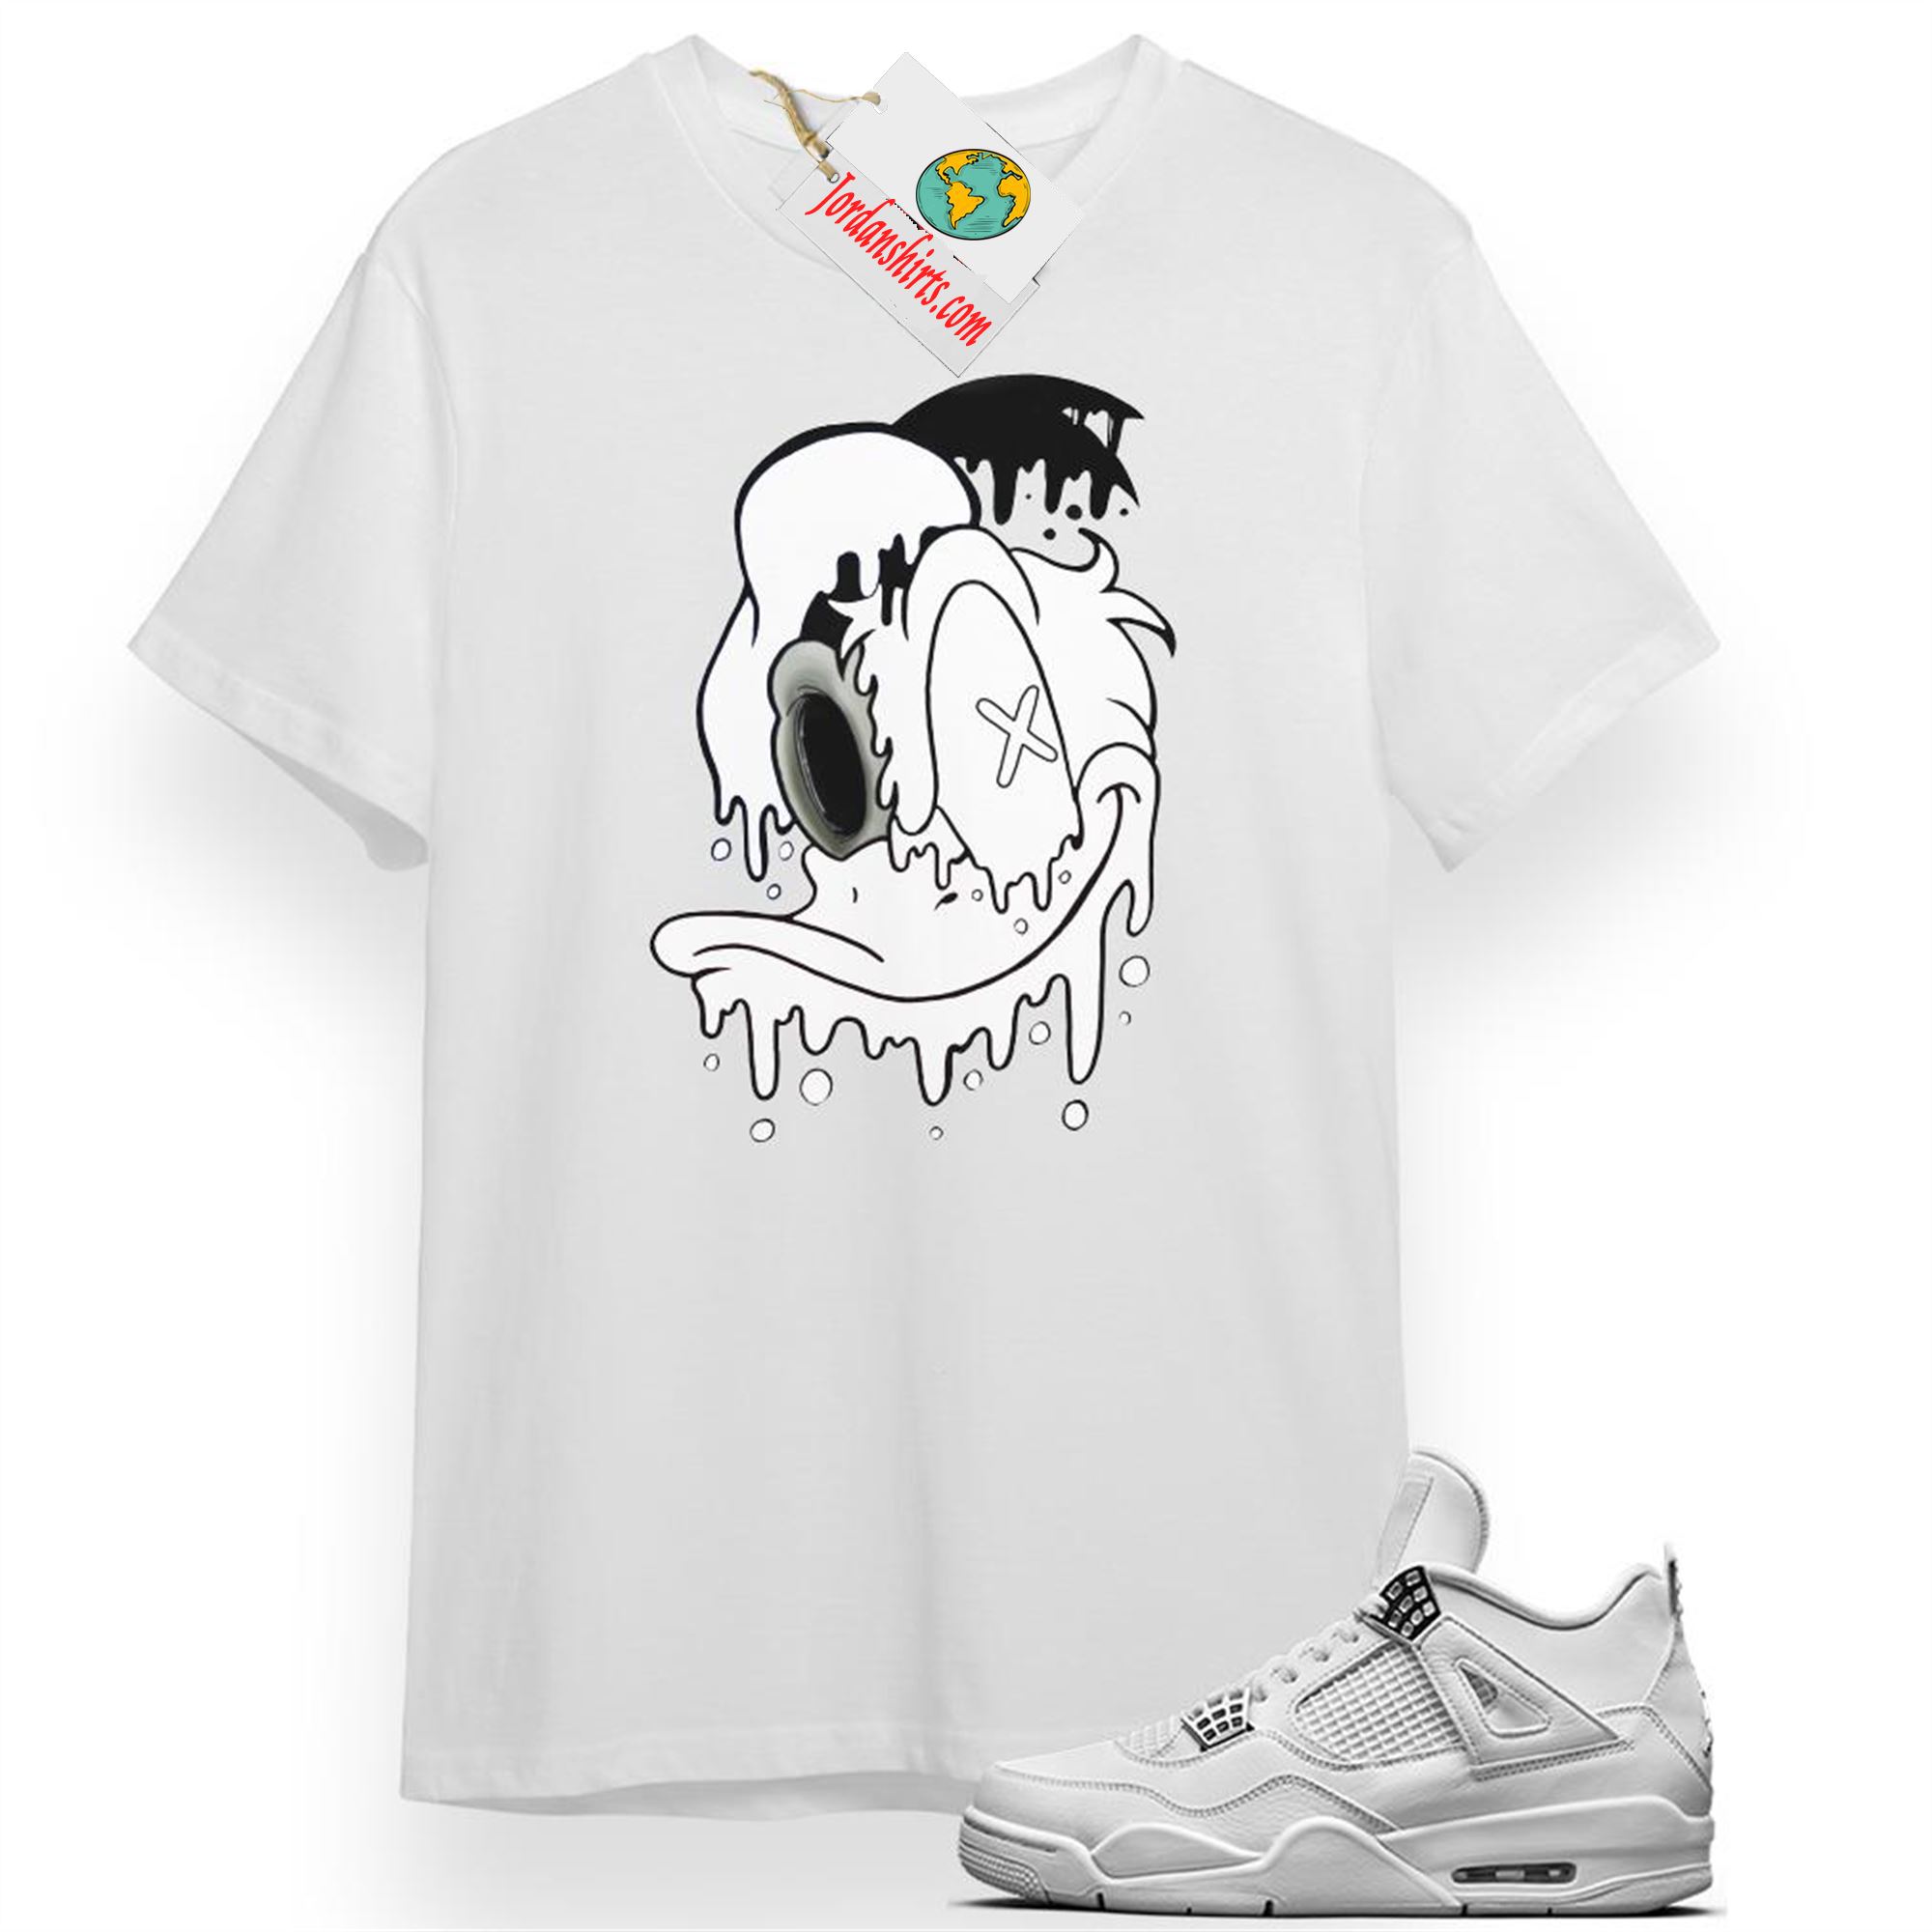 Jordan 4 Shirt, Donald Dripping White T-shirt Air Jordan 4 Pure Money 4s Size Up To 5xl